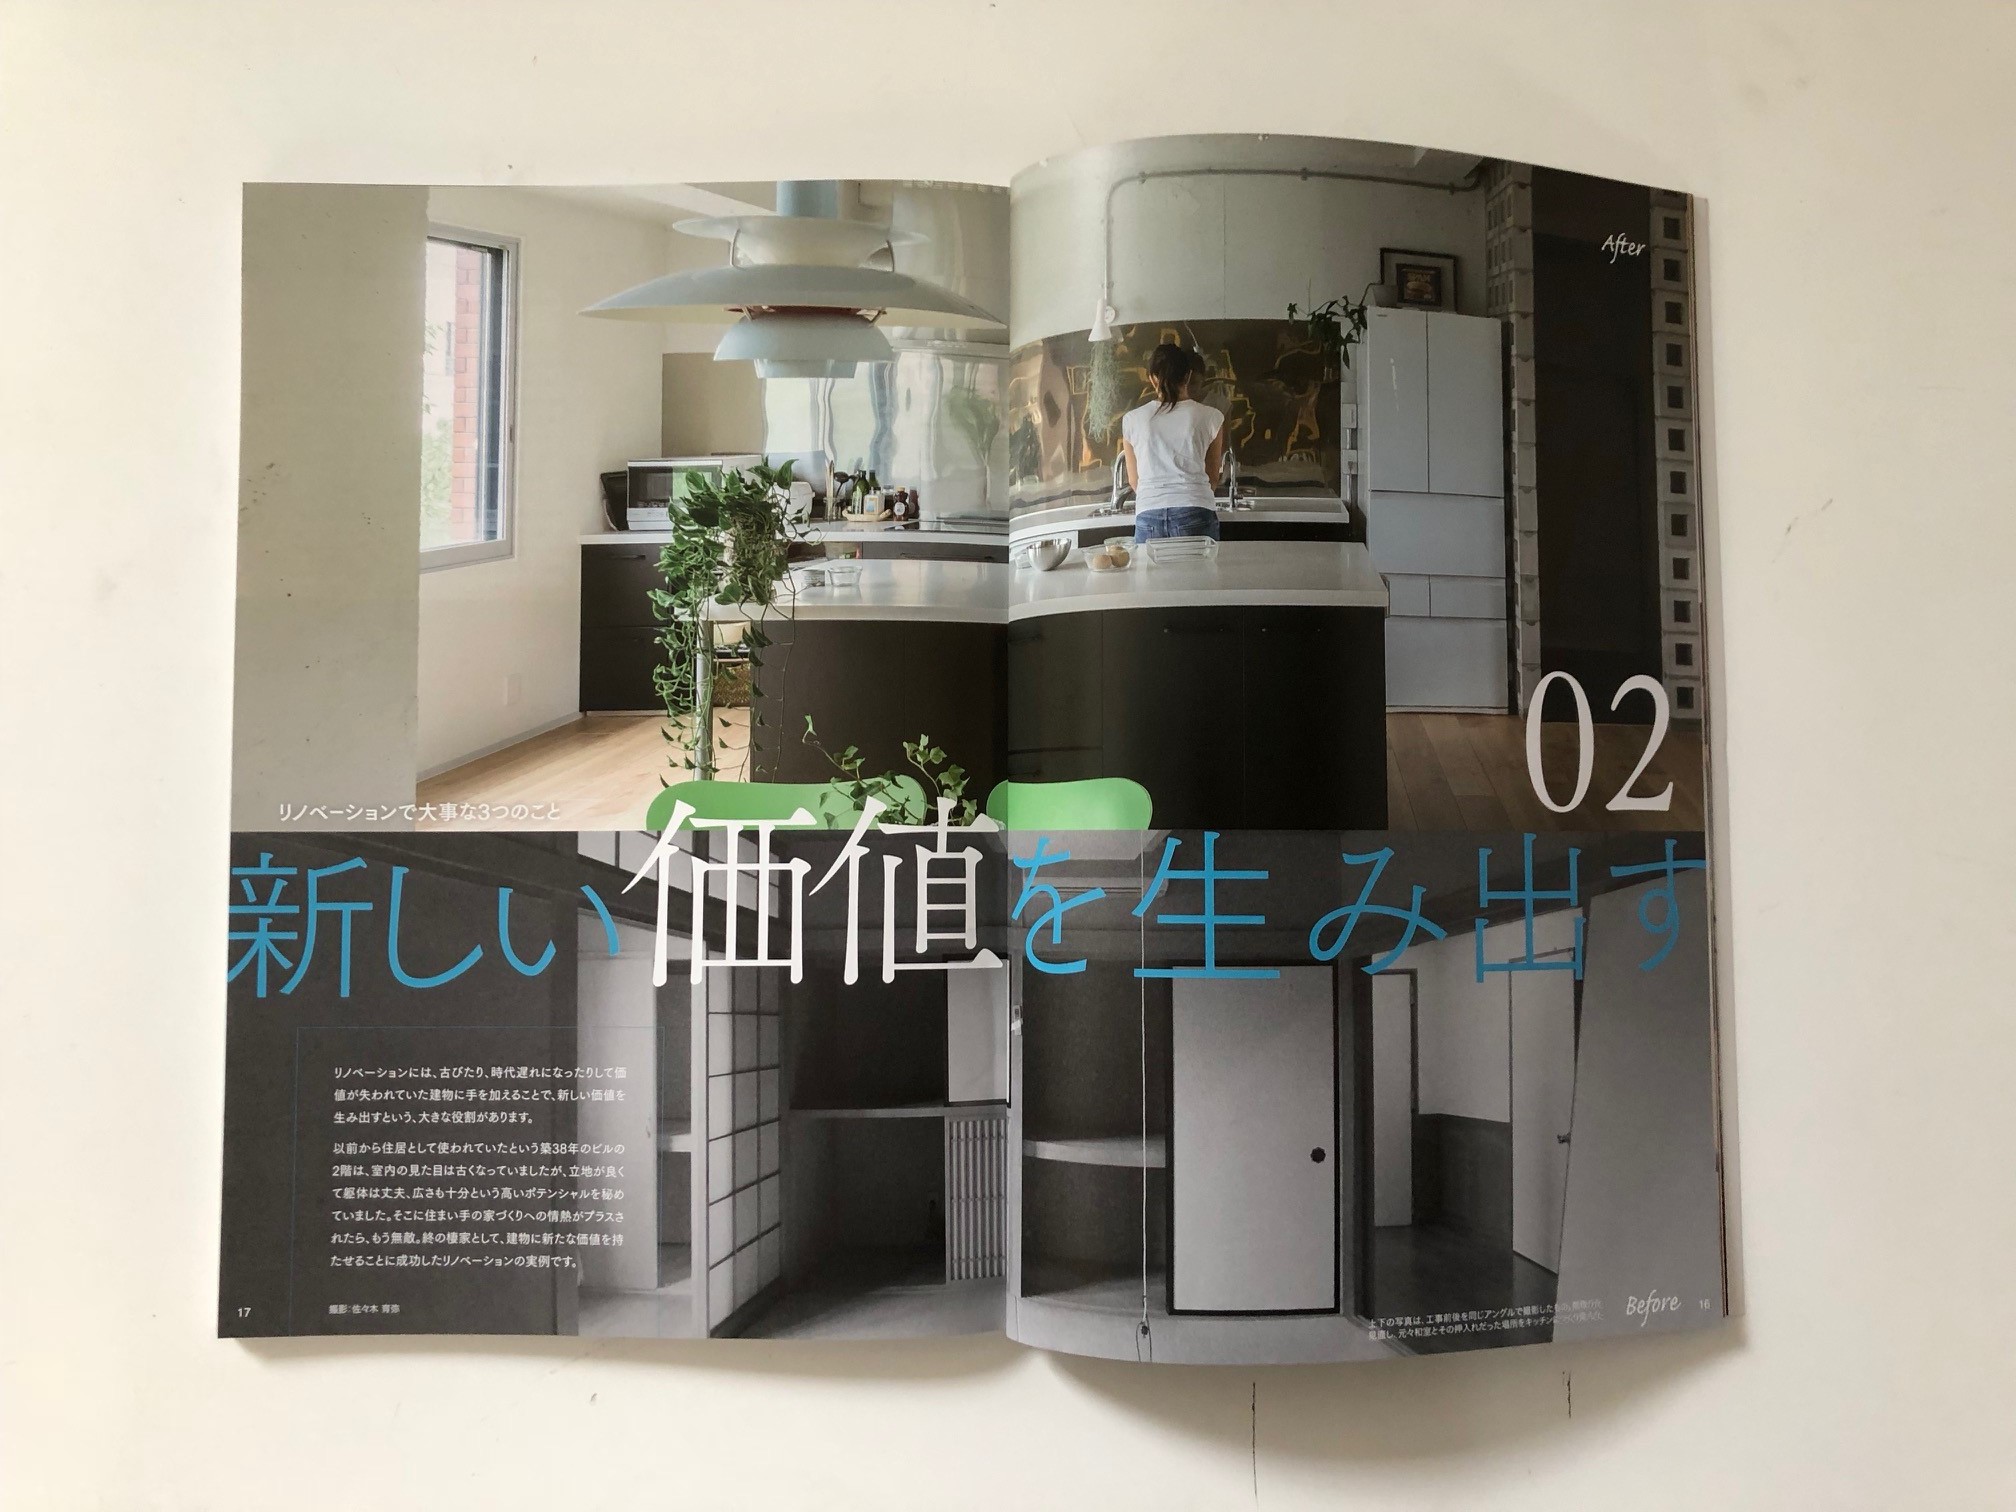 「Replan2018秋冬号臨時増刊　デザインリノベーション宮城2019」にROUGH&WILDが掲載されました